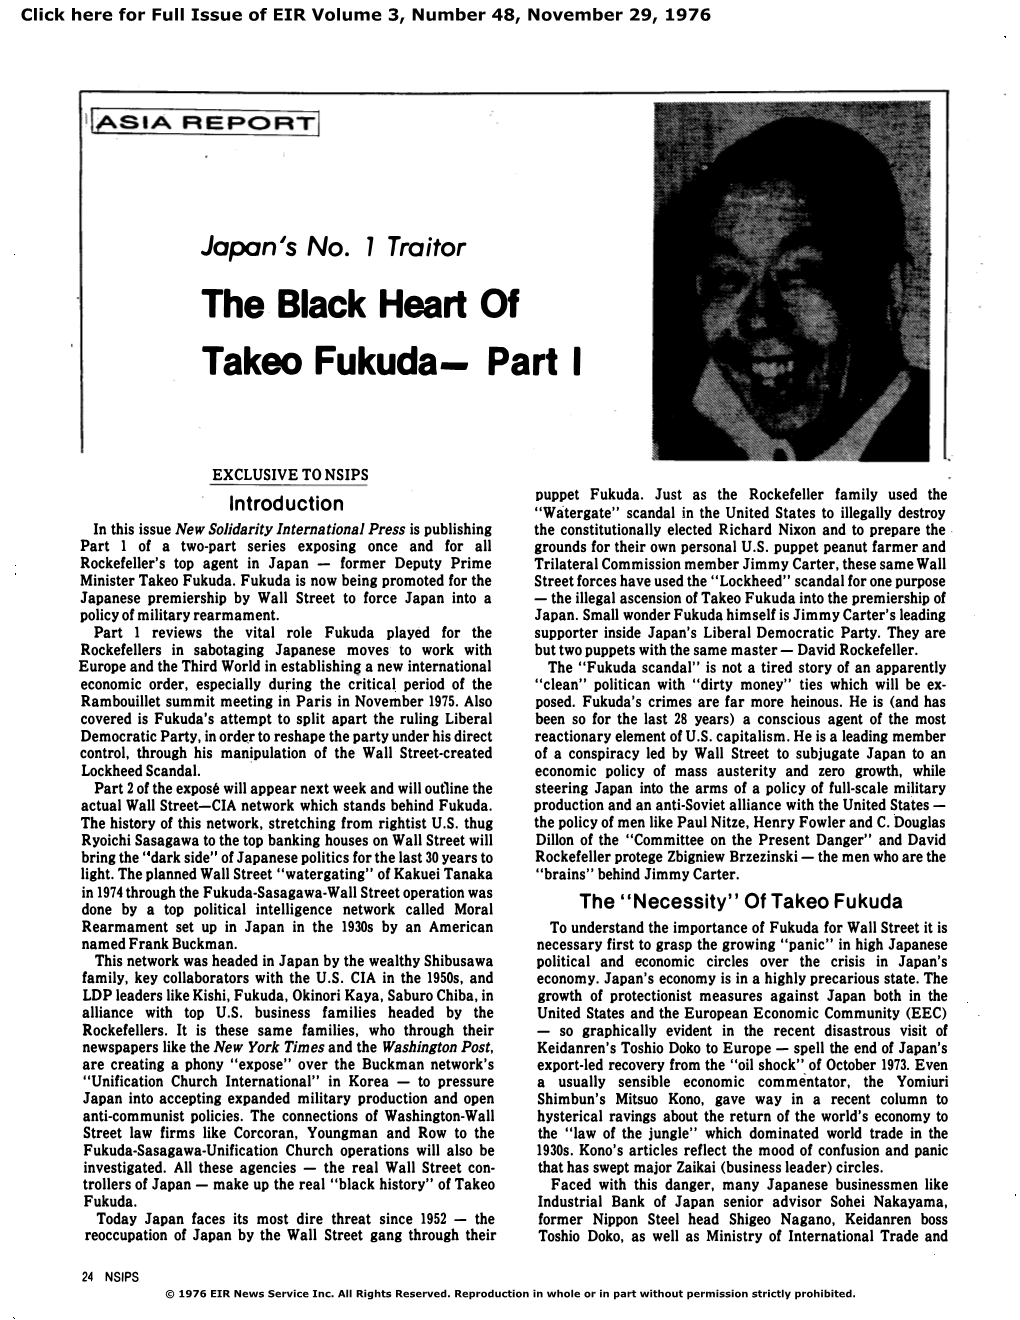 The Black Heart of Takeo Fukuda- Part I